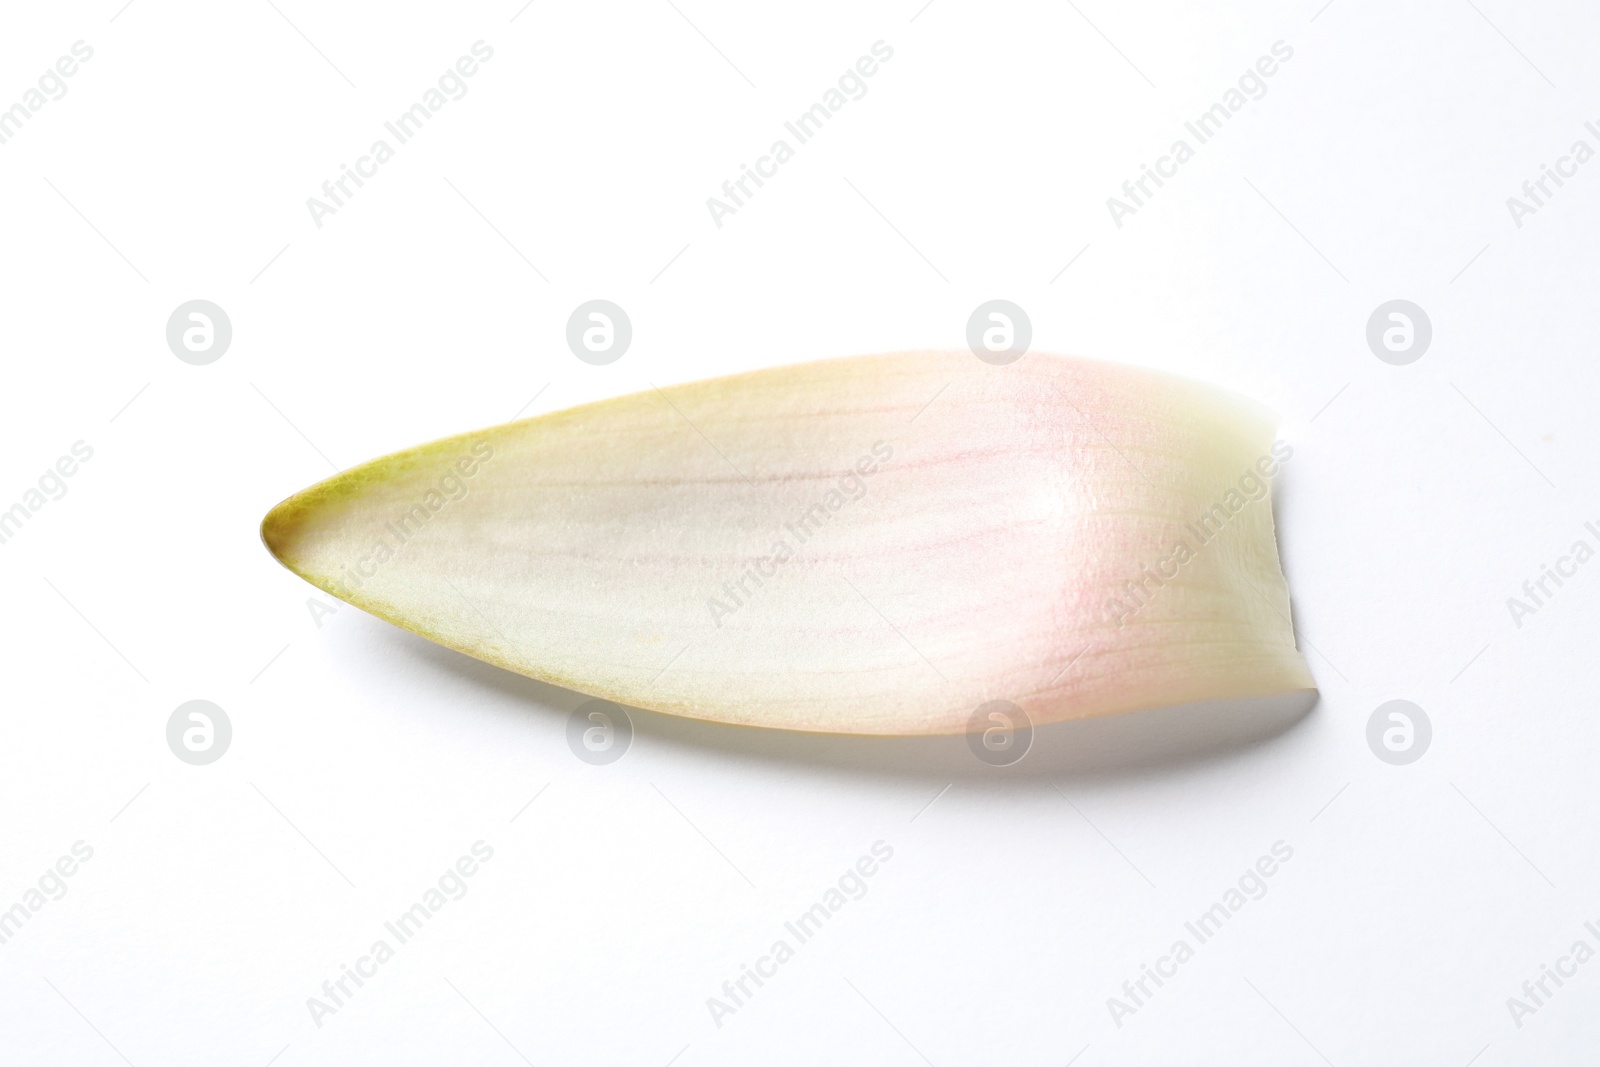 Photo of Beautiful lotus flower petal isolated on white